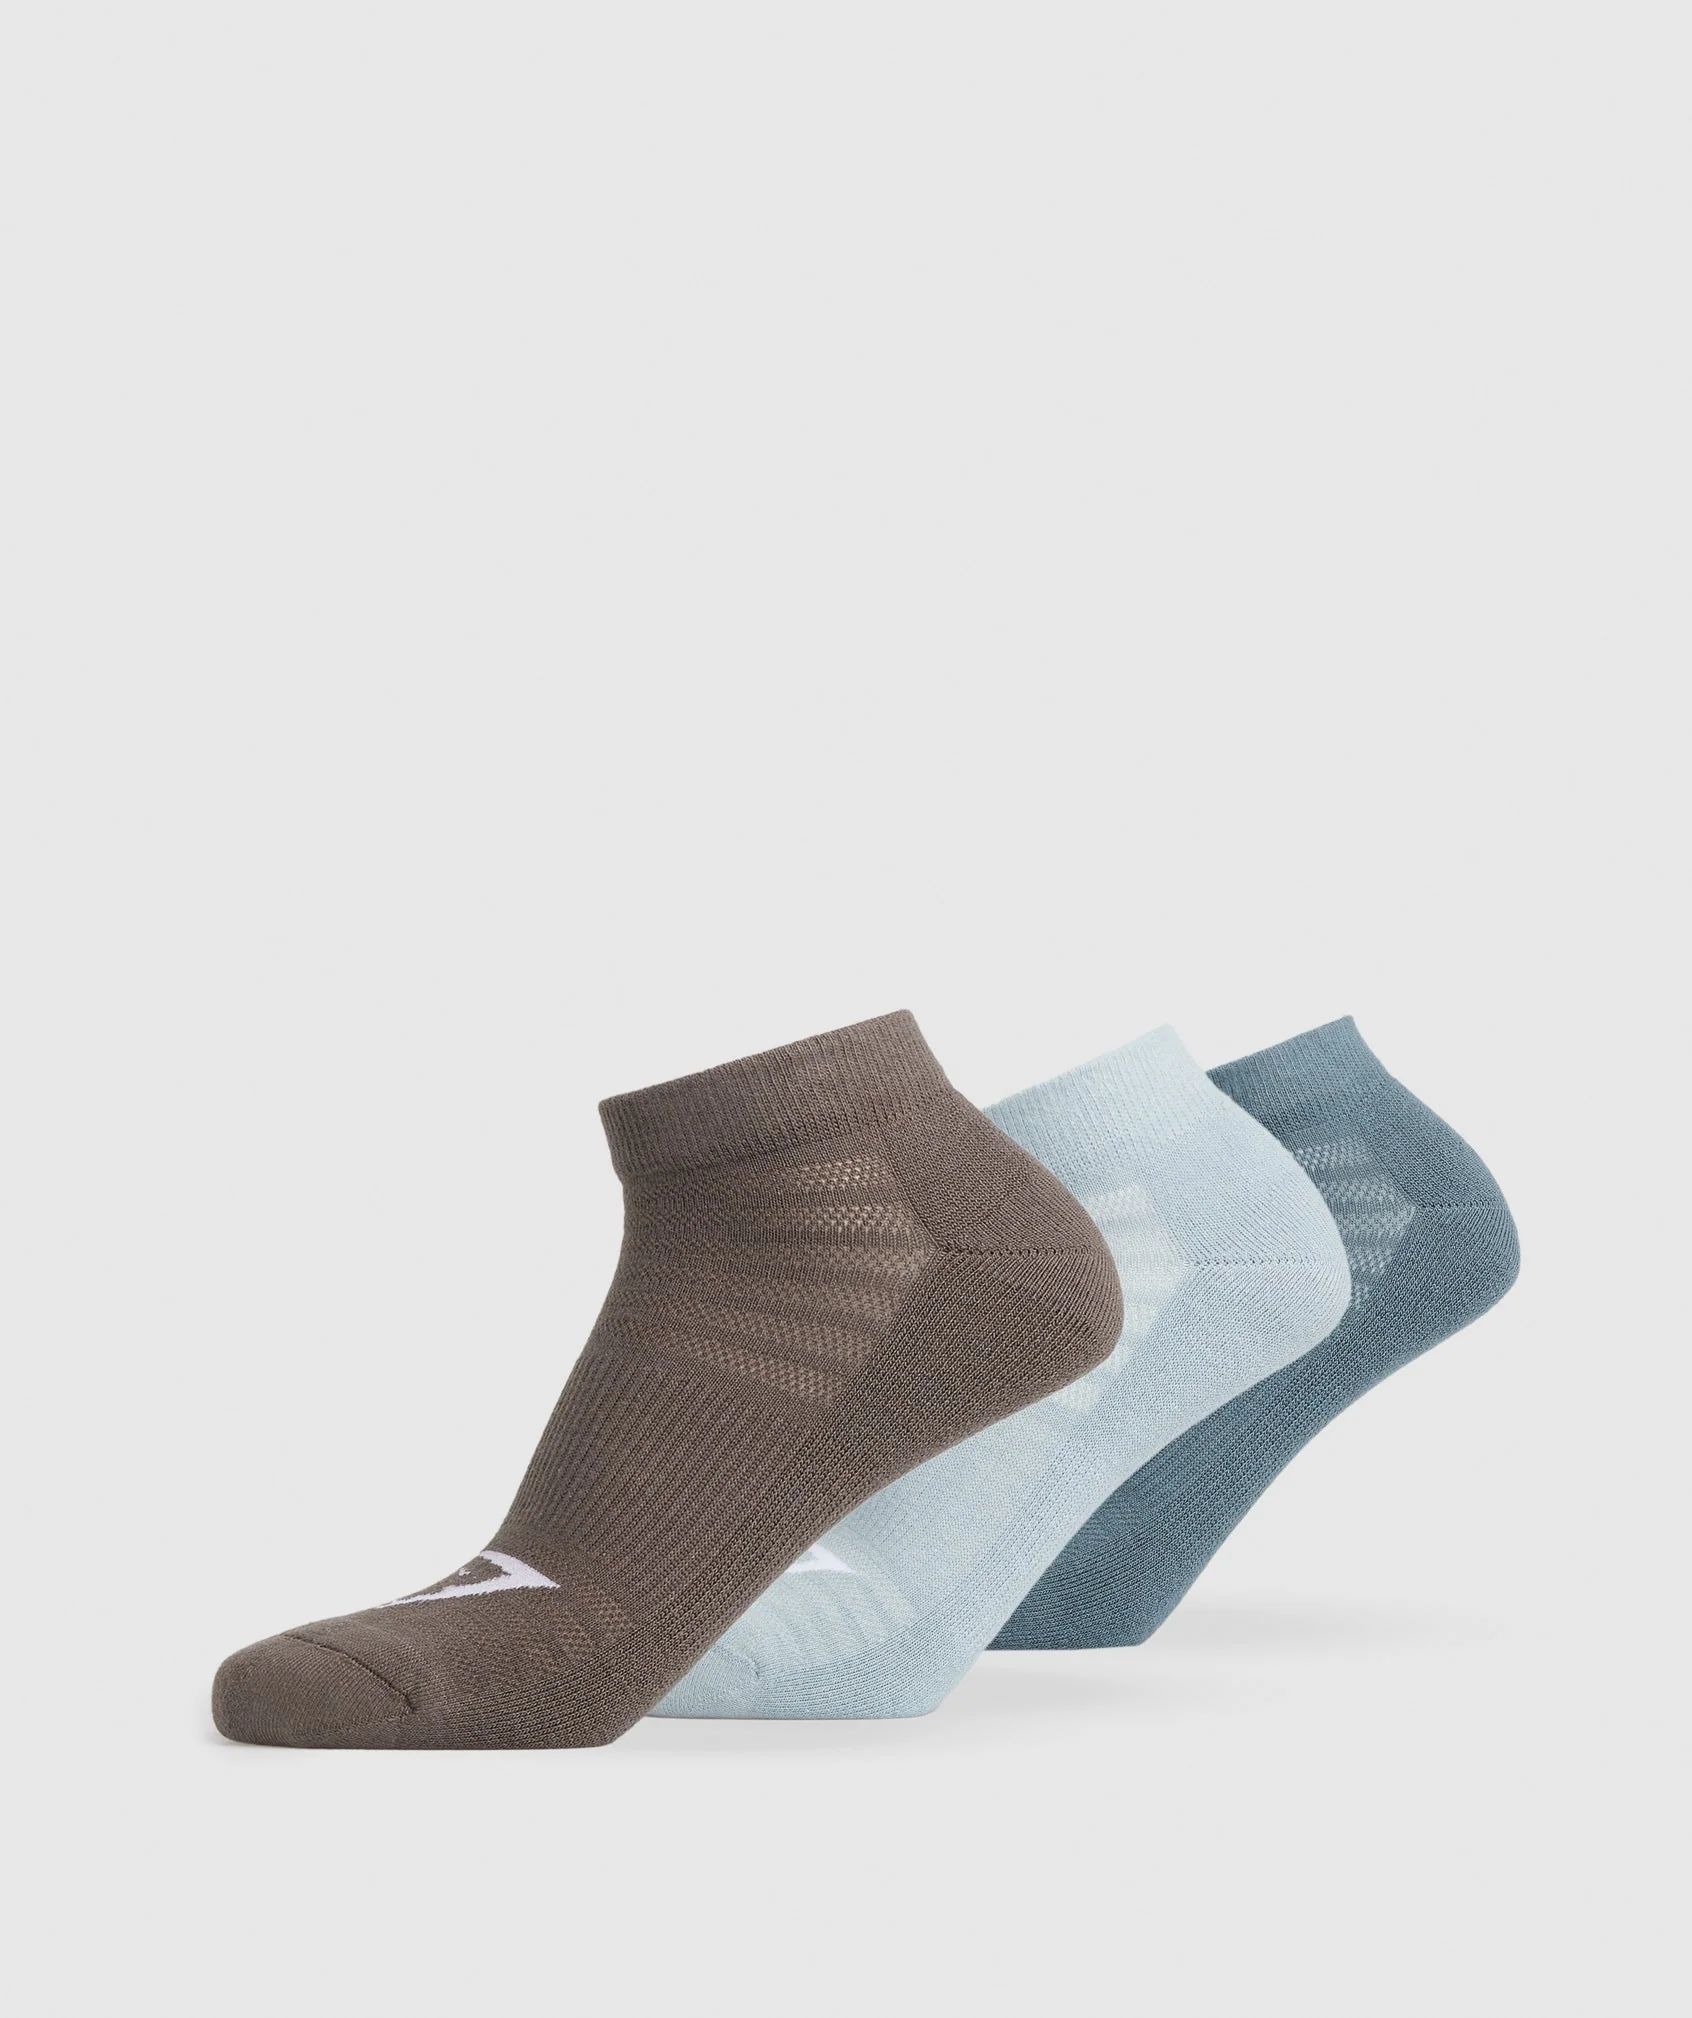 Gymshark Ankle Socks 3pk - Denim Teal/Salt Blue/Camo Brown | Gymshark US